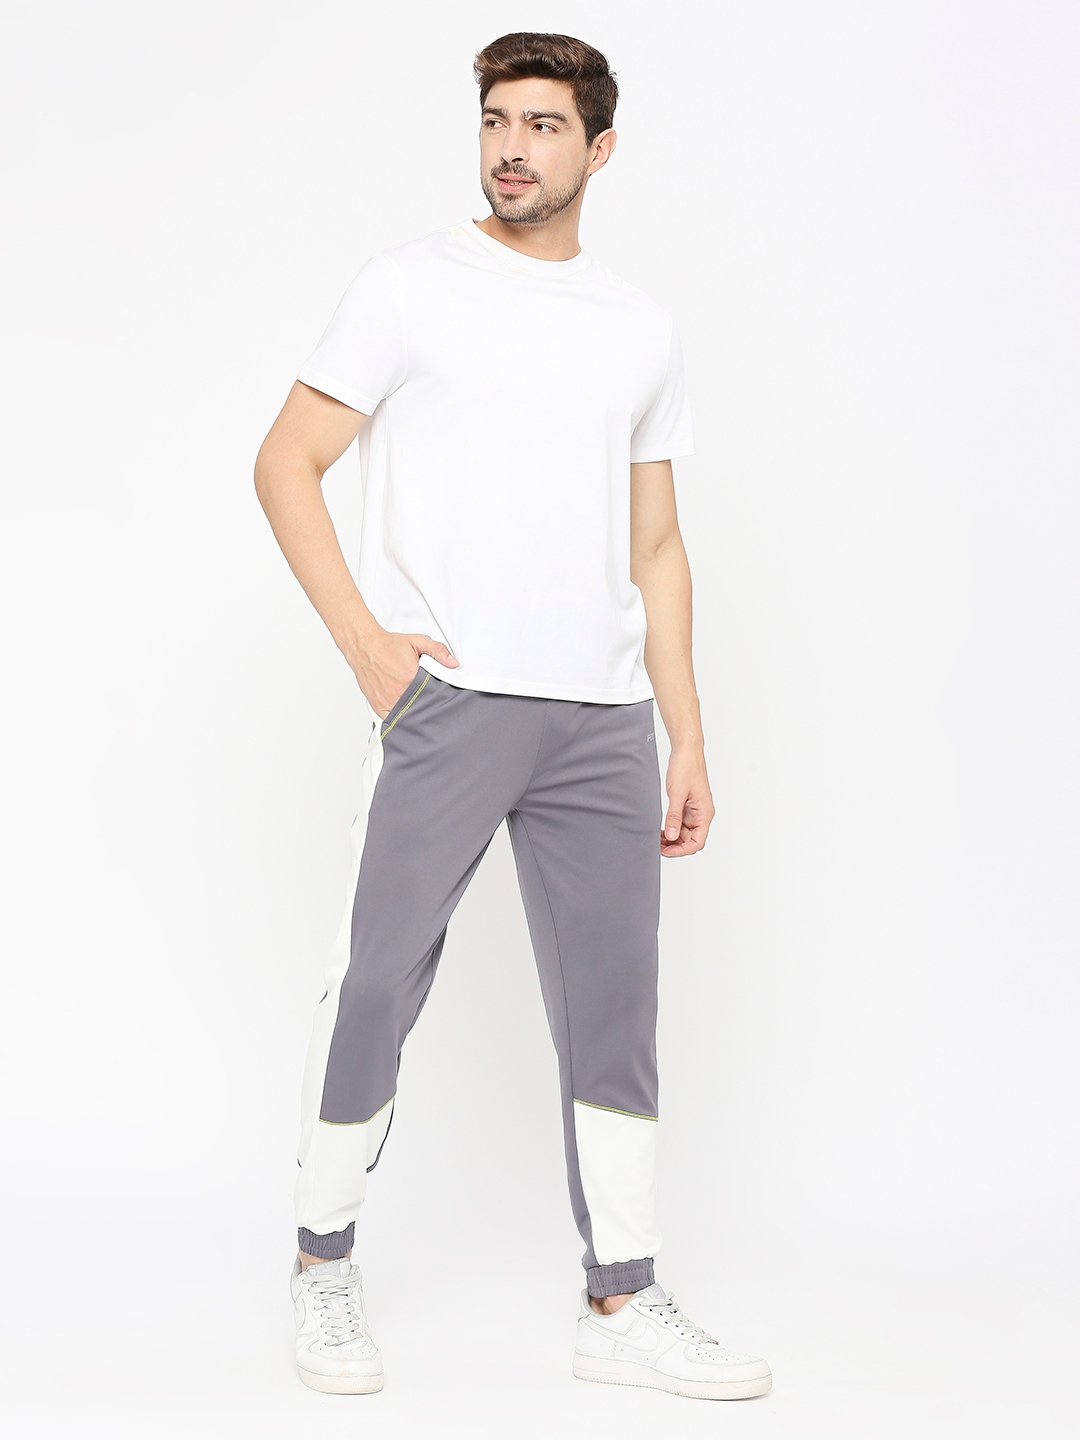 FITZ | Men's Slim Fit Grey Cotton Blend Casual Joogers 5